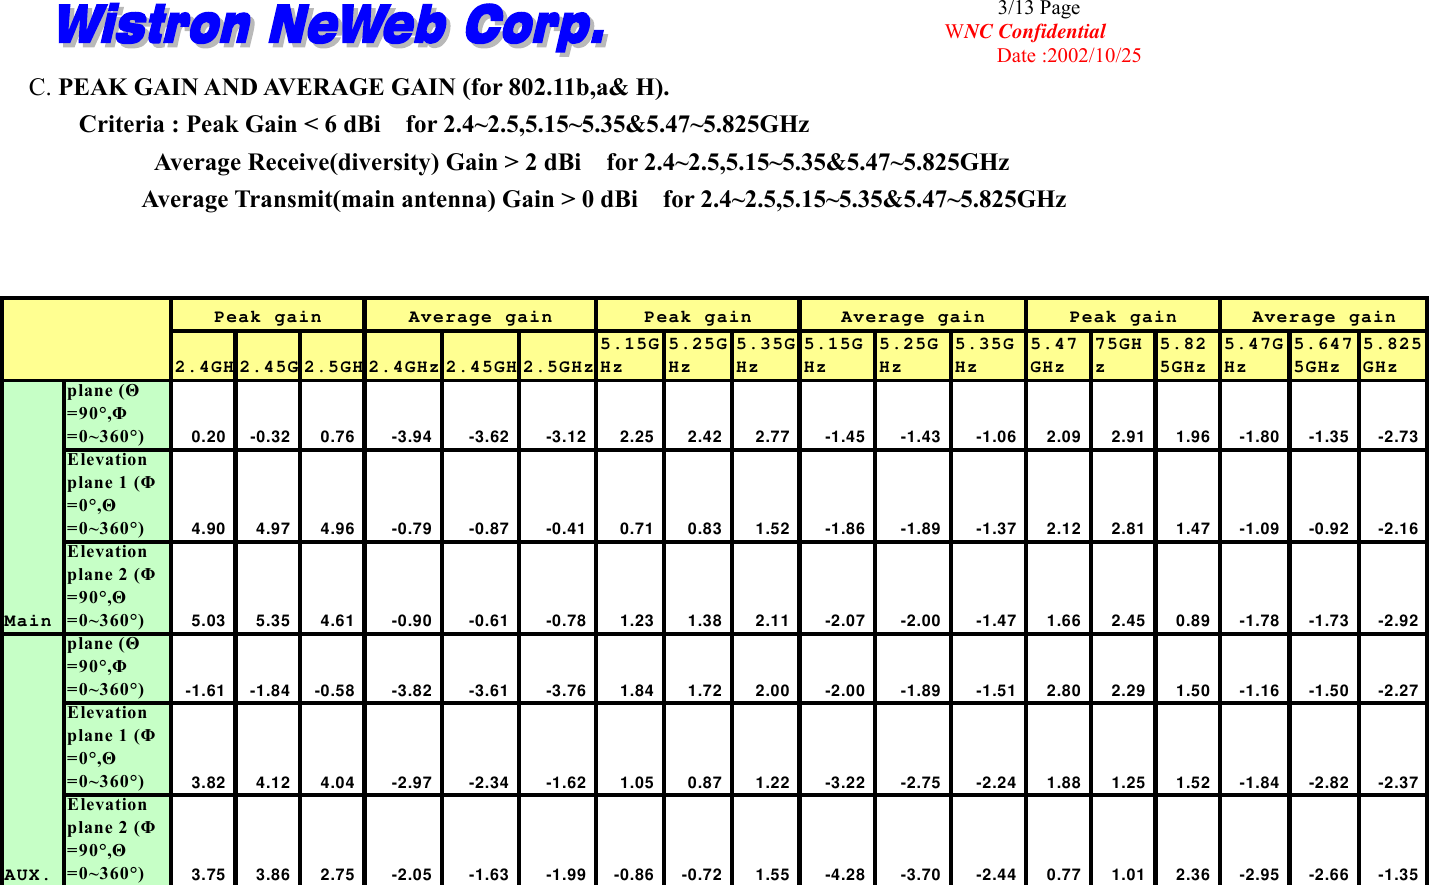                                                                                              3/13 Page WNC Confidential       Date :2002/10/25 C. PEAK GAIN AND AVERAGE GAIN (for 802.11b,a&amp; H).     Criteria : Peak Gain &lt; 6 dBi  for 2.4~2.5,5.15~5.35&amp;5.47~5.825GHz           Average Receive(diversity) Gain &gt; 2 dBi  for 2.4~2.5,5.15~5.35&amp;5.47~5.825GHz           Average Transmit(main antenna) Gain &gt; 0 dBi  for 2.4~2.5,5.15~5.35&amp;5.47~5.825GHz    2.4GH 2.45G 2.5GH 2.4GHz 2.45GH 2.5GHz5.15GHz5.25GHz5.35GHz5.15GHz5.25GHz5.35GHz5.47GHz75GHz5.825GHz5.47GHz5.6475GHz5.825GHzplane (Θ=90°,Φ=0~360°) 0.20 -0.32 0.76 -3.94 -3.62 -3.12 2.25 2.42 2.77 -1.45 -1.43 -1.06 2.09 2.91 1.96 -1.80 -1.35 -2.73Elevationplane 1 (Φ=0°,Θ=0~360°) 4.90 4.97 4.96 -0.79 -0.87 -0.41 0.71 0.83 1.52 -1.86 -1.89 -1.37 2.12 2.81 1.47 -1.09 -0.92 -2.16Elevationplane 2 (Φ=90°,Θ=0~360°) 5.03 5.35 4.61 -0.90 -0.61 -0.78 1.23 1.38 2.11 -2.07 -2.00 -1.47 1.66 2.45 0.89 -1.78 -1.73 -2.92plane (Θ=90°,Φ=0~360°) -1.61 -1.84 -0.58 -3.82 -3.61 -3.76 1.84 1.72 2.00 -2.00 -1.89 -1.51 2.80 2.29 1.50 -1.16 -1.50 -2.27Elevationplane 1 (Φ=0°,Θ=0~360°) 3.82 4.12 4.04 -2.97 -2.34 -1.62 1.05 0.87 1.22 -3.22 -2.75 -2.24 1.88 1.25 1.52 -1.84 -2.82 -2.37Elevationplane 2 (Φ=90°,Θ=0~360°) 3.75 3.86 2.75 -2.05 -1.63 -1.99 -0.86 -0.72 1.55 -4.28 -3.70 -2.44 0.77 1.01 2.36 -2.95 -2.66 -1.35Average gainPeak gain Average gainPeak gainAverage gainPeak gainMainAUX.     